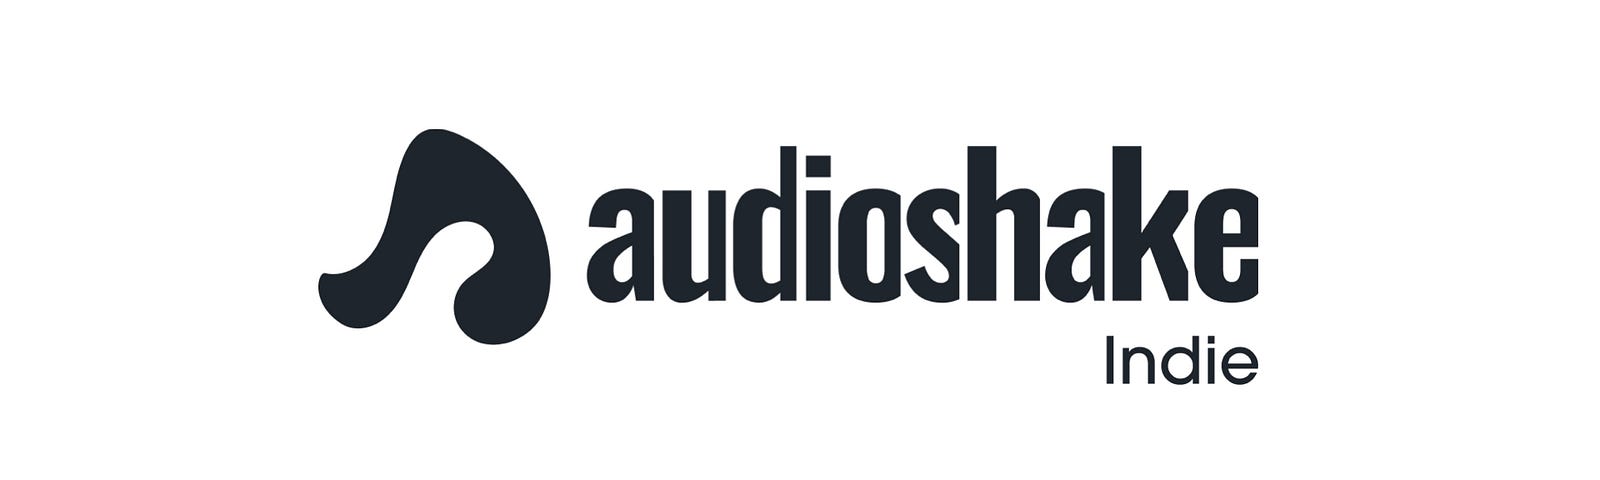 audioshake logo